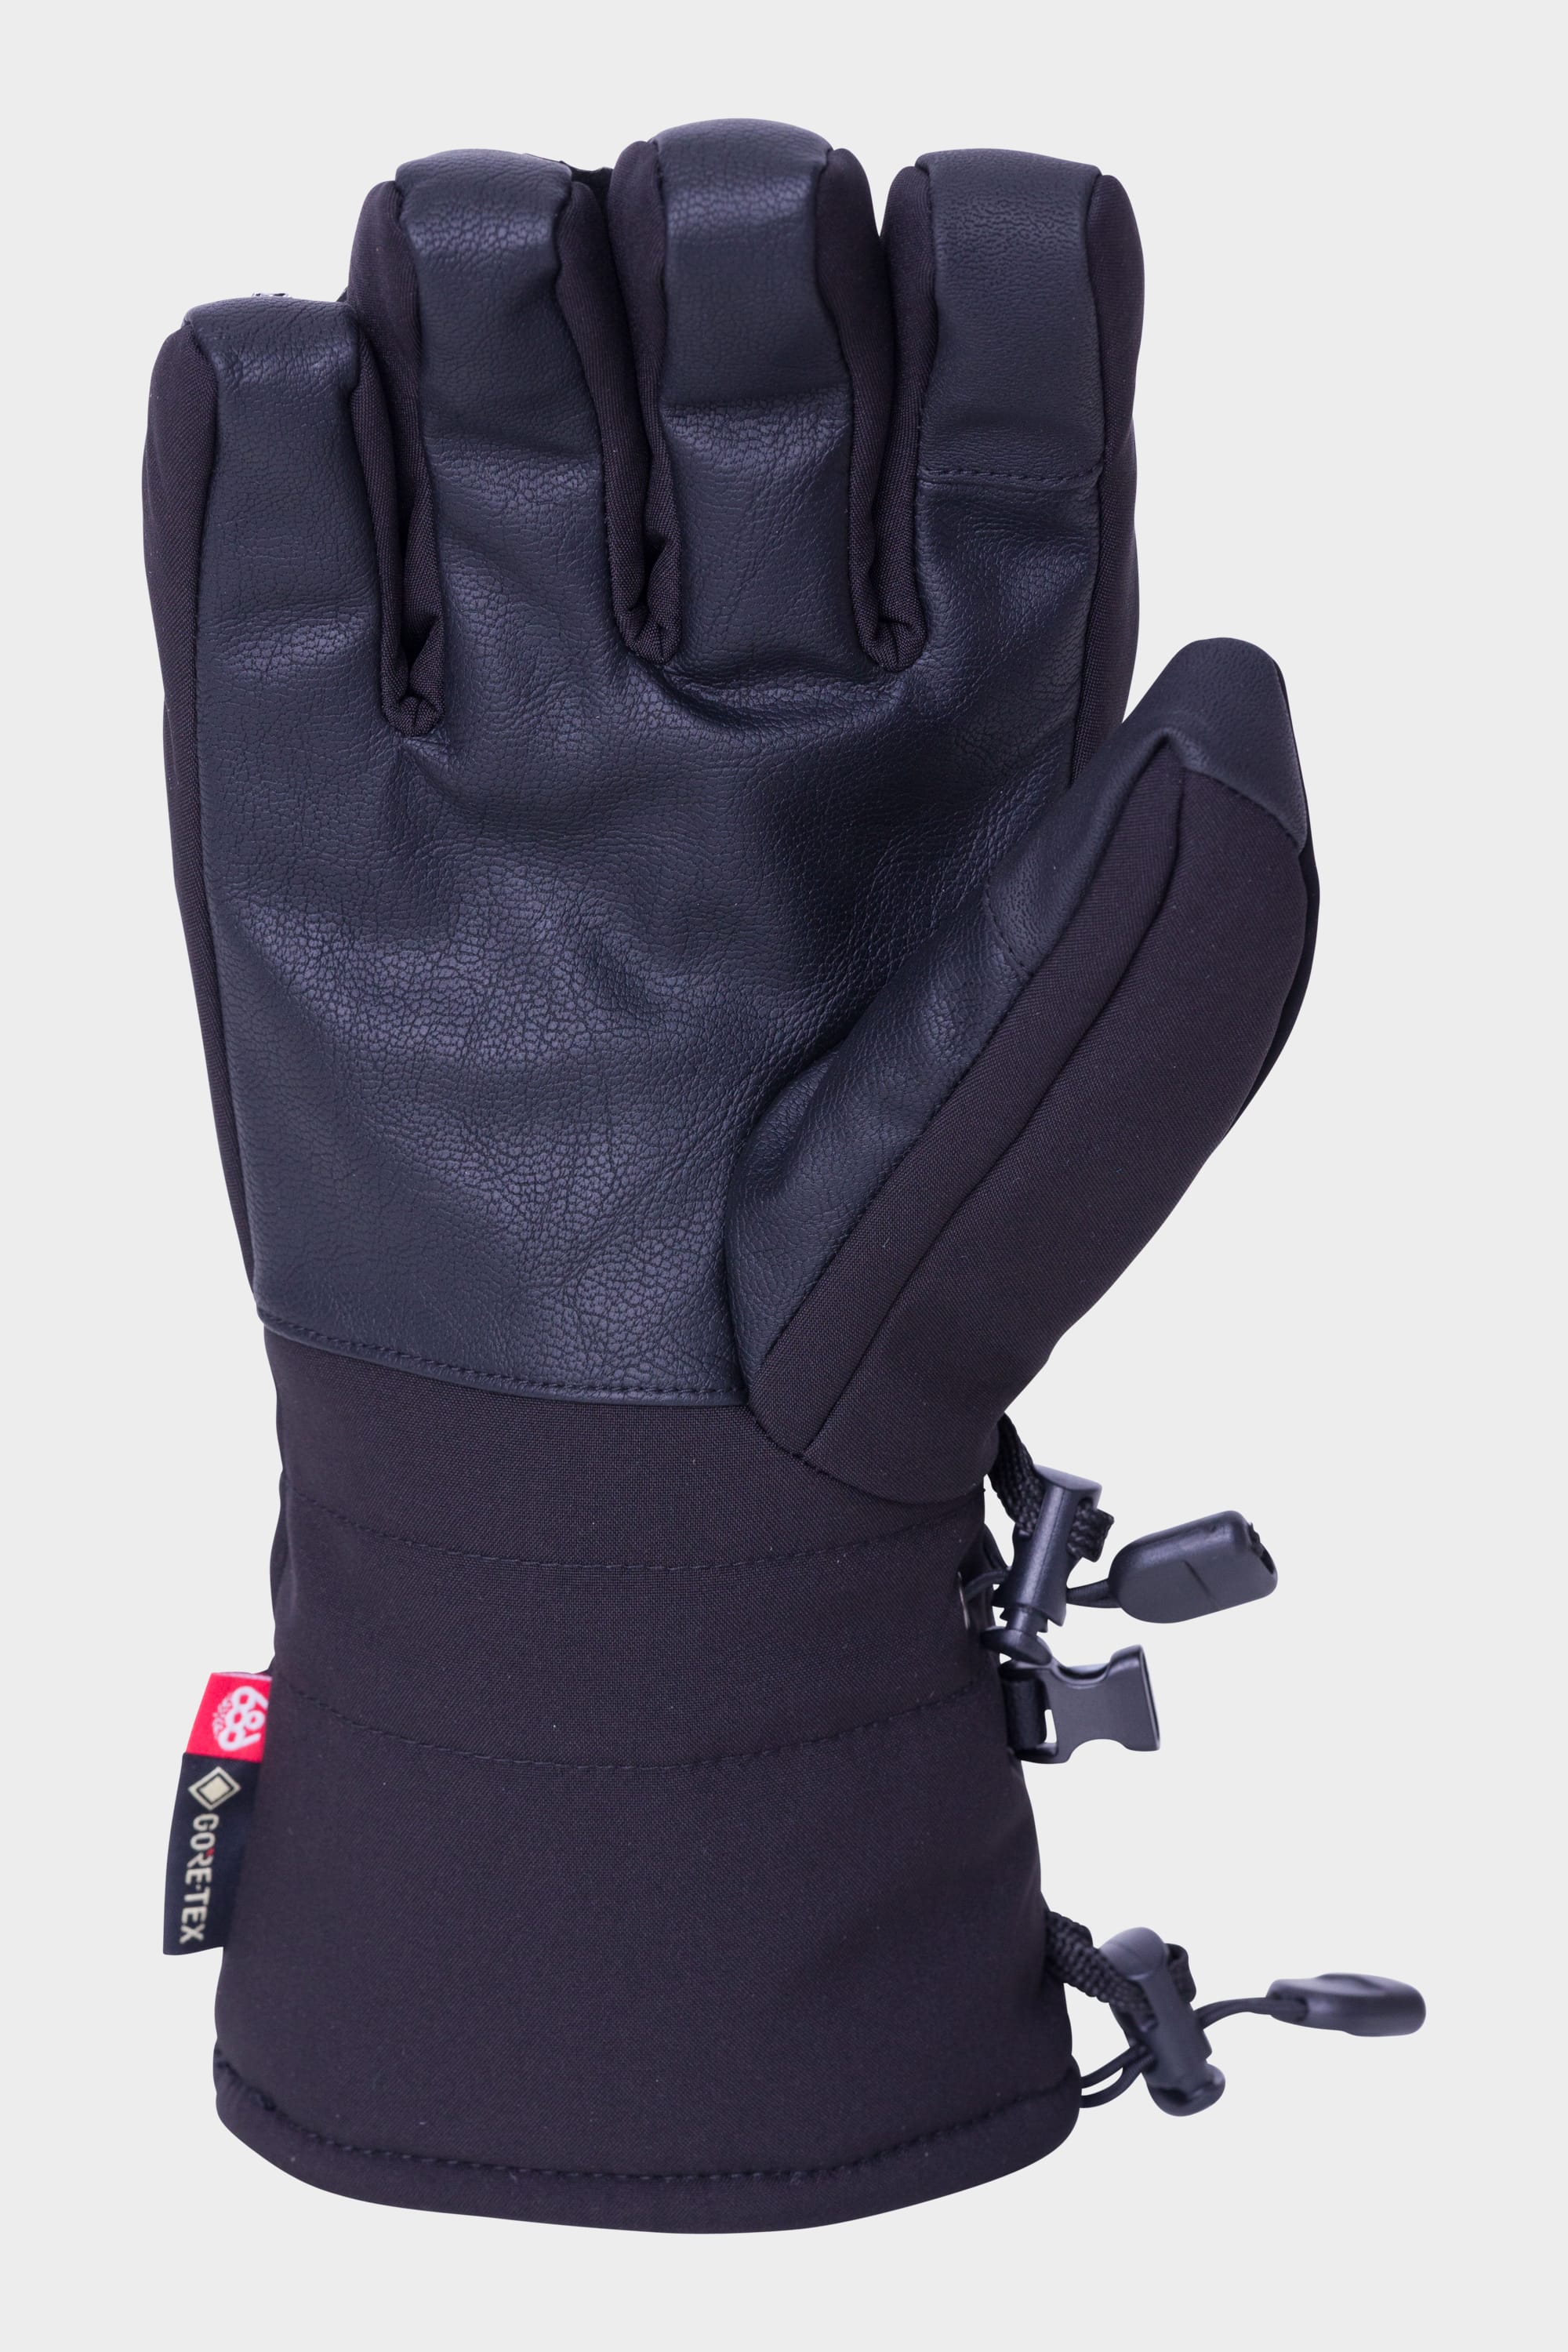 686 Men's GORE-TEX Linear Glove